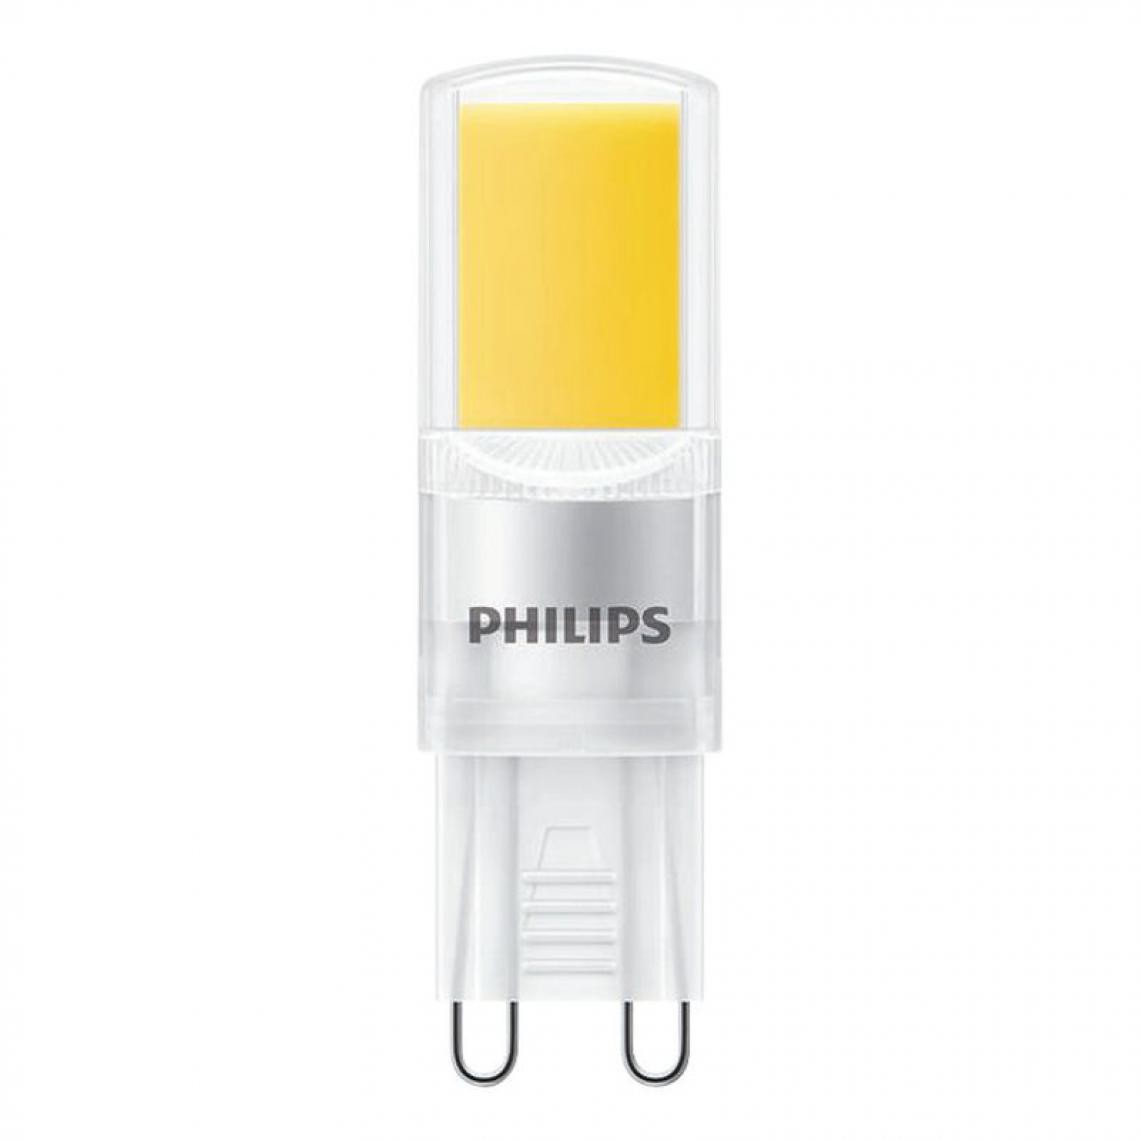 Philips - Ampoule LED capsule G9 40w PHILIPS Blanc chaud - Ampoules LED